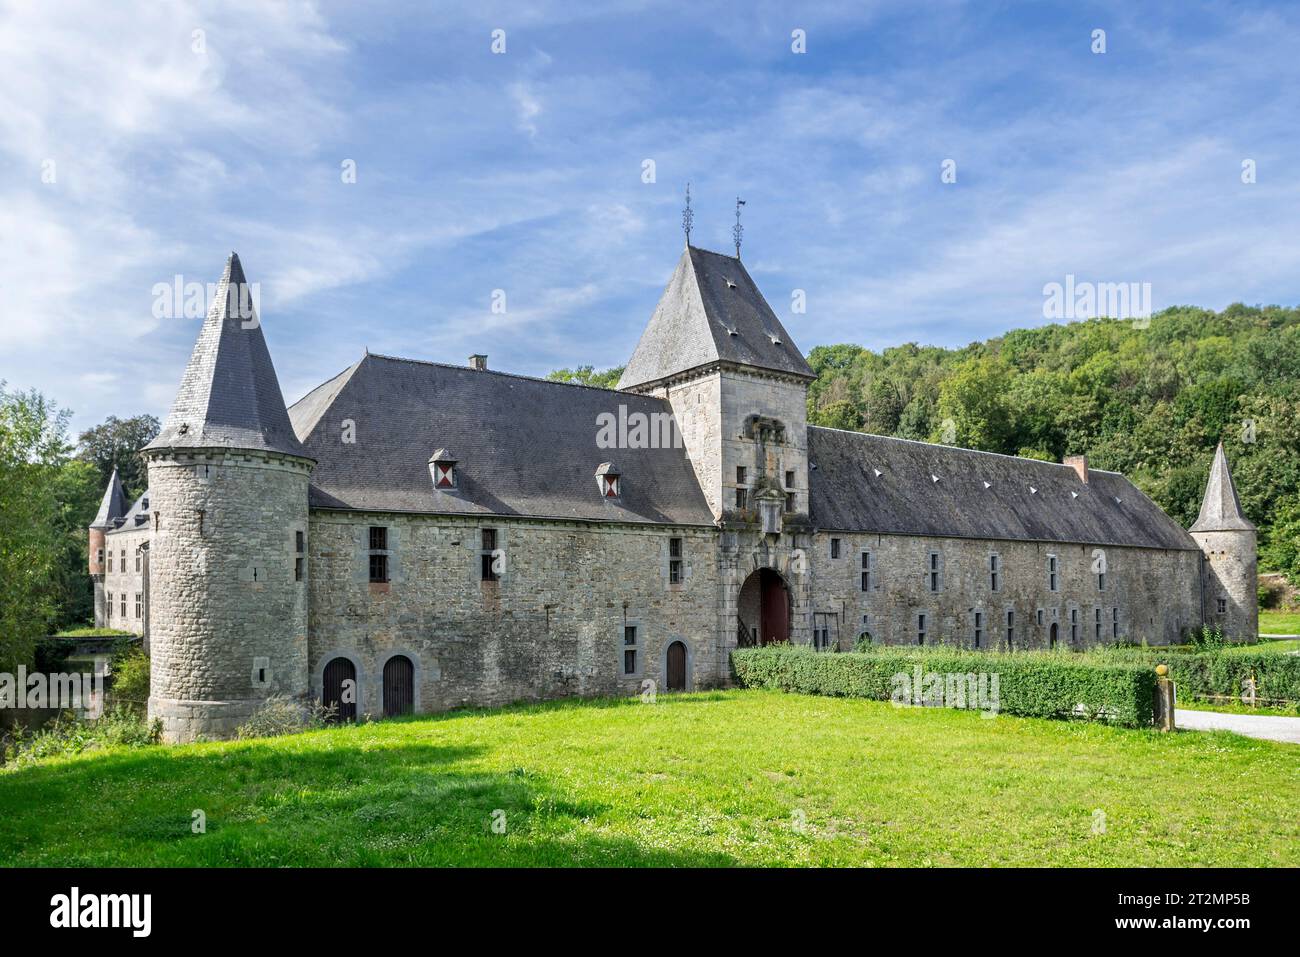 Château de Spontin, entrance gate of medieval 16th century moated castle near Yvoir, province of Namur, Belgian Ardennes, Wallonia, Belgium Stock Photo